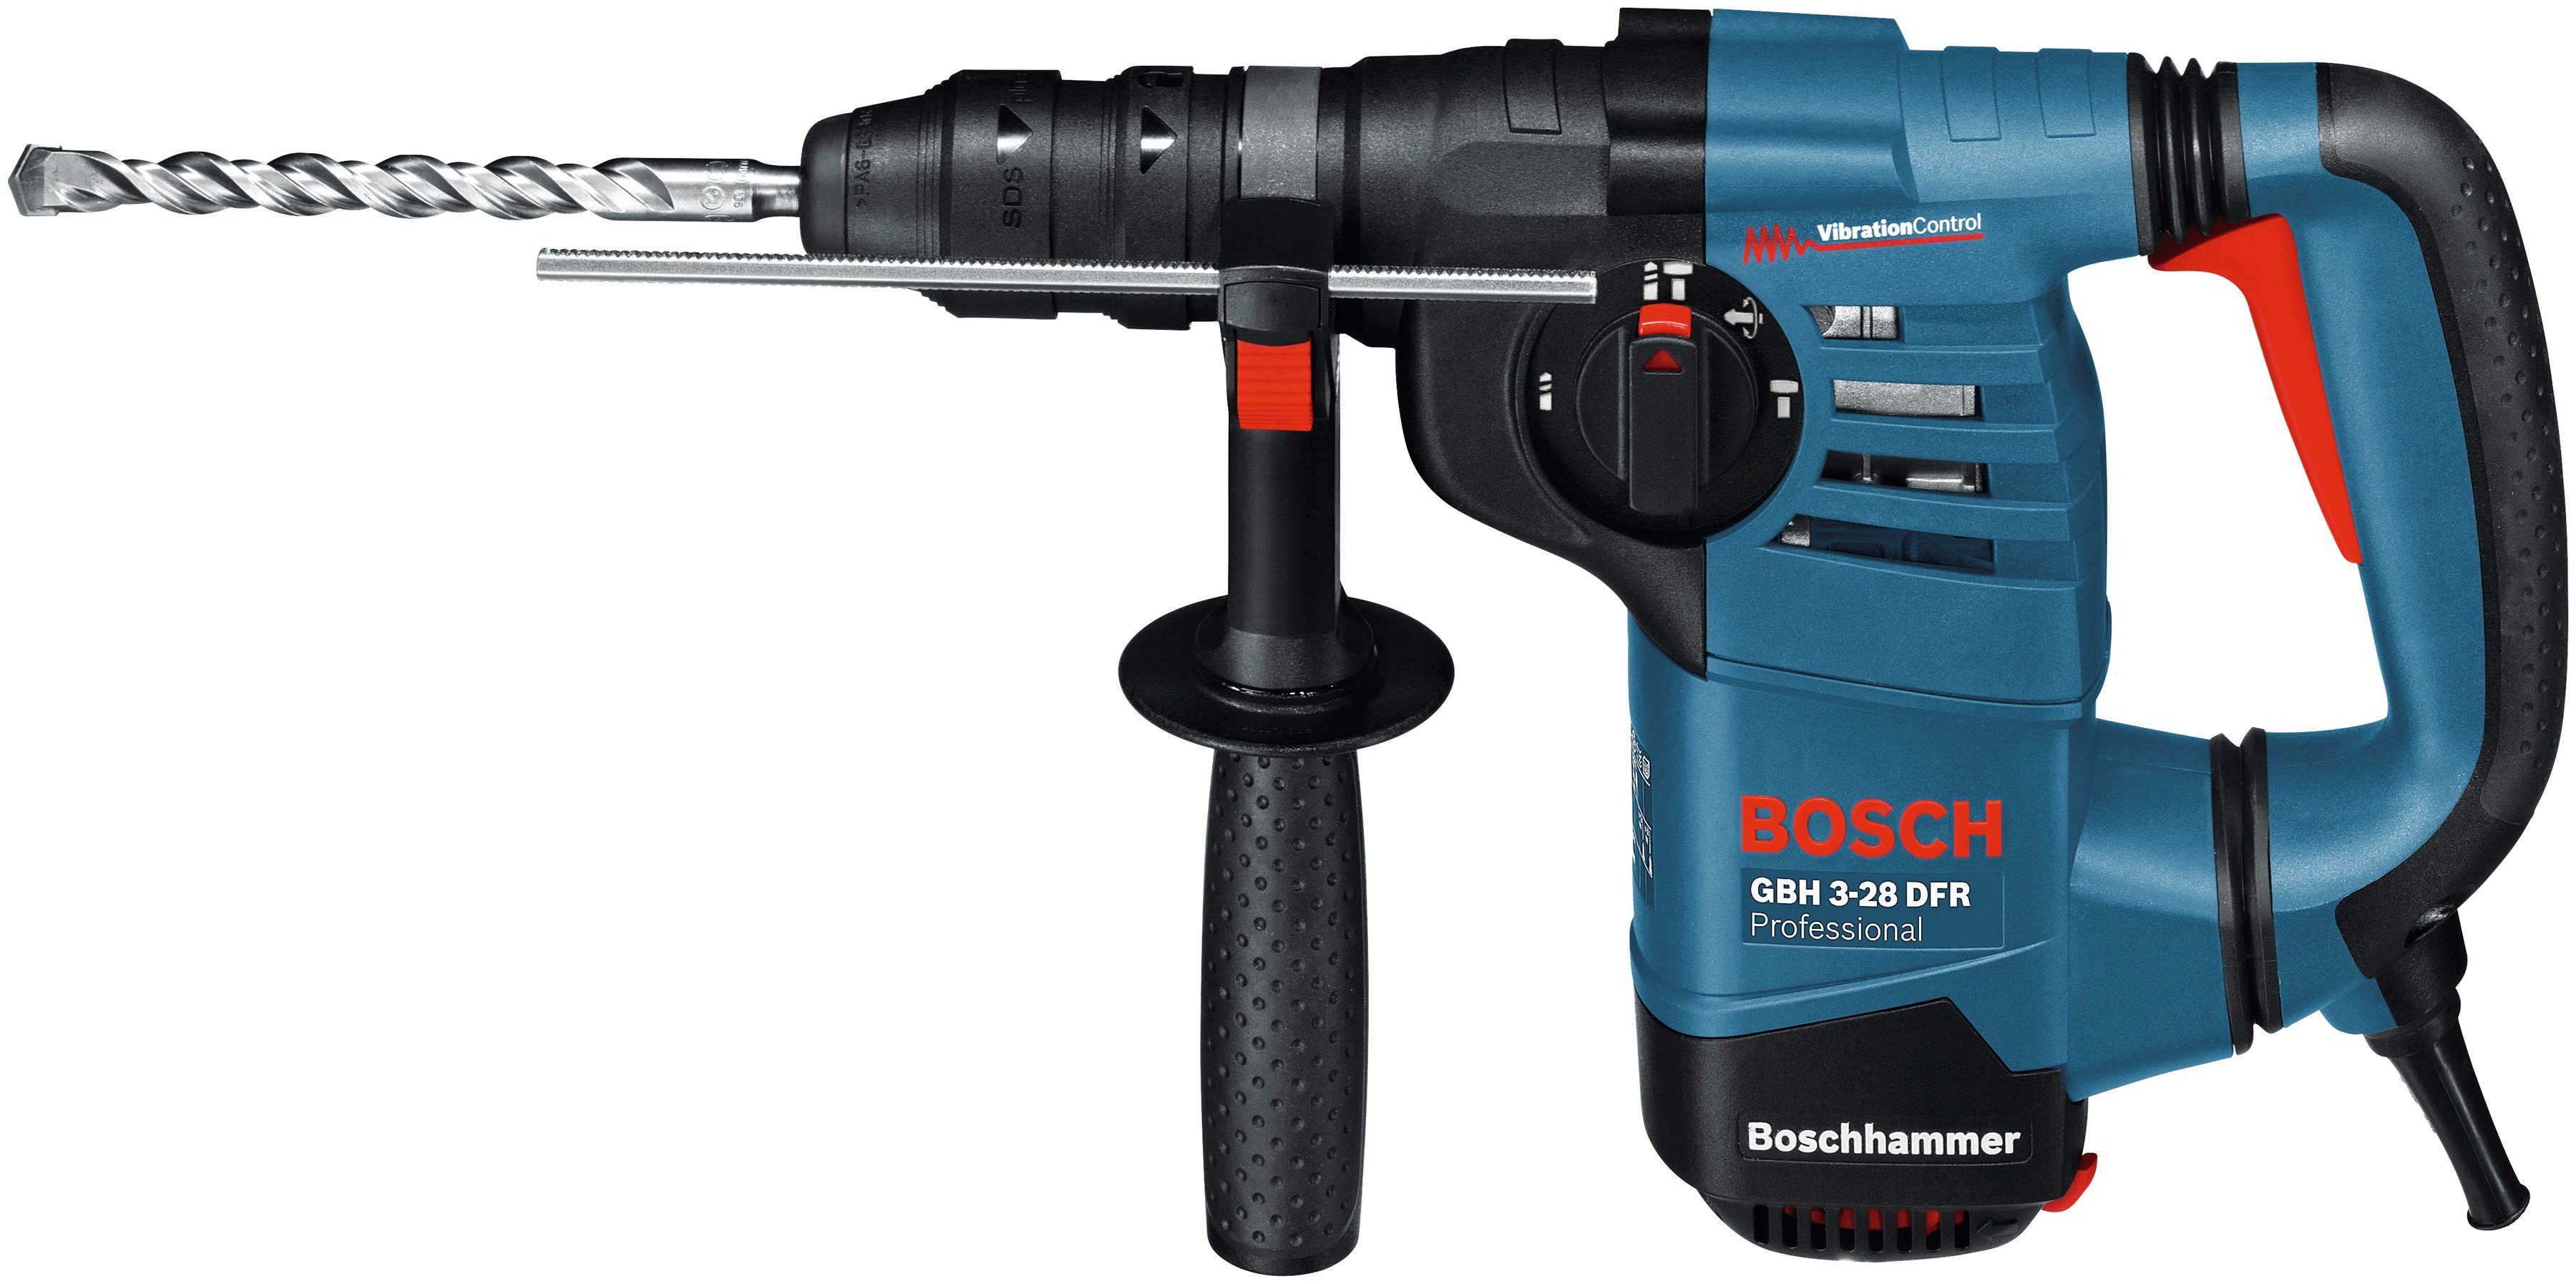 900 max. Koffer Professional DFR, U/min, im SDS-Plus, Bohrhammer 3-28 GBH Bosch